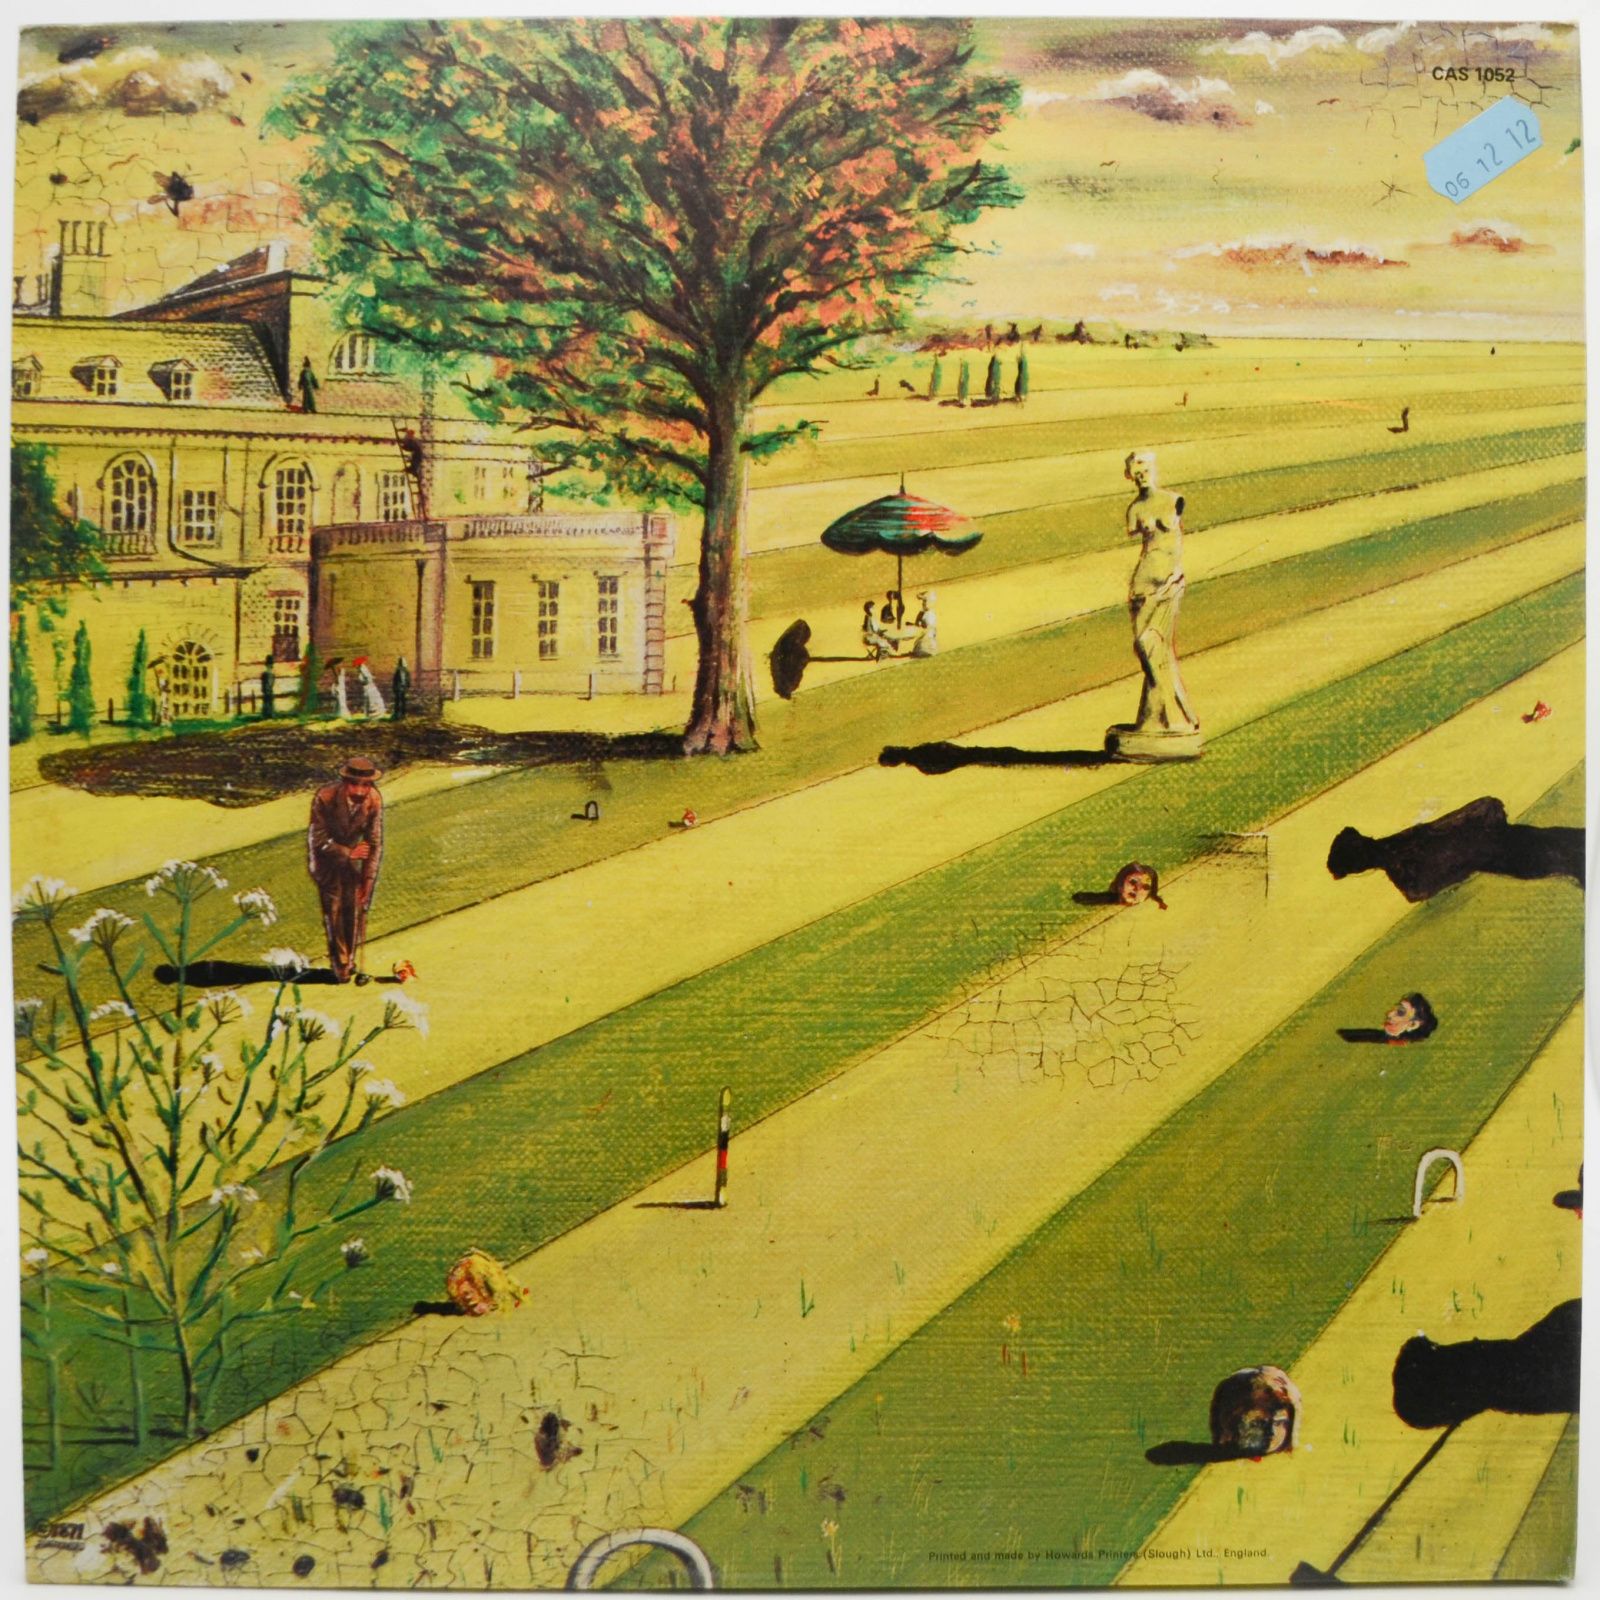 Genesis — Nursery Cryme (UK), 1971